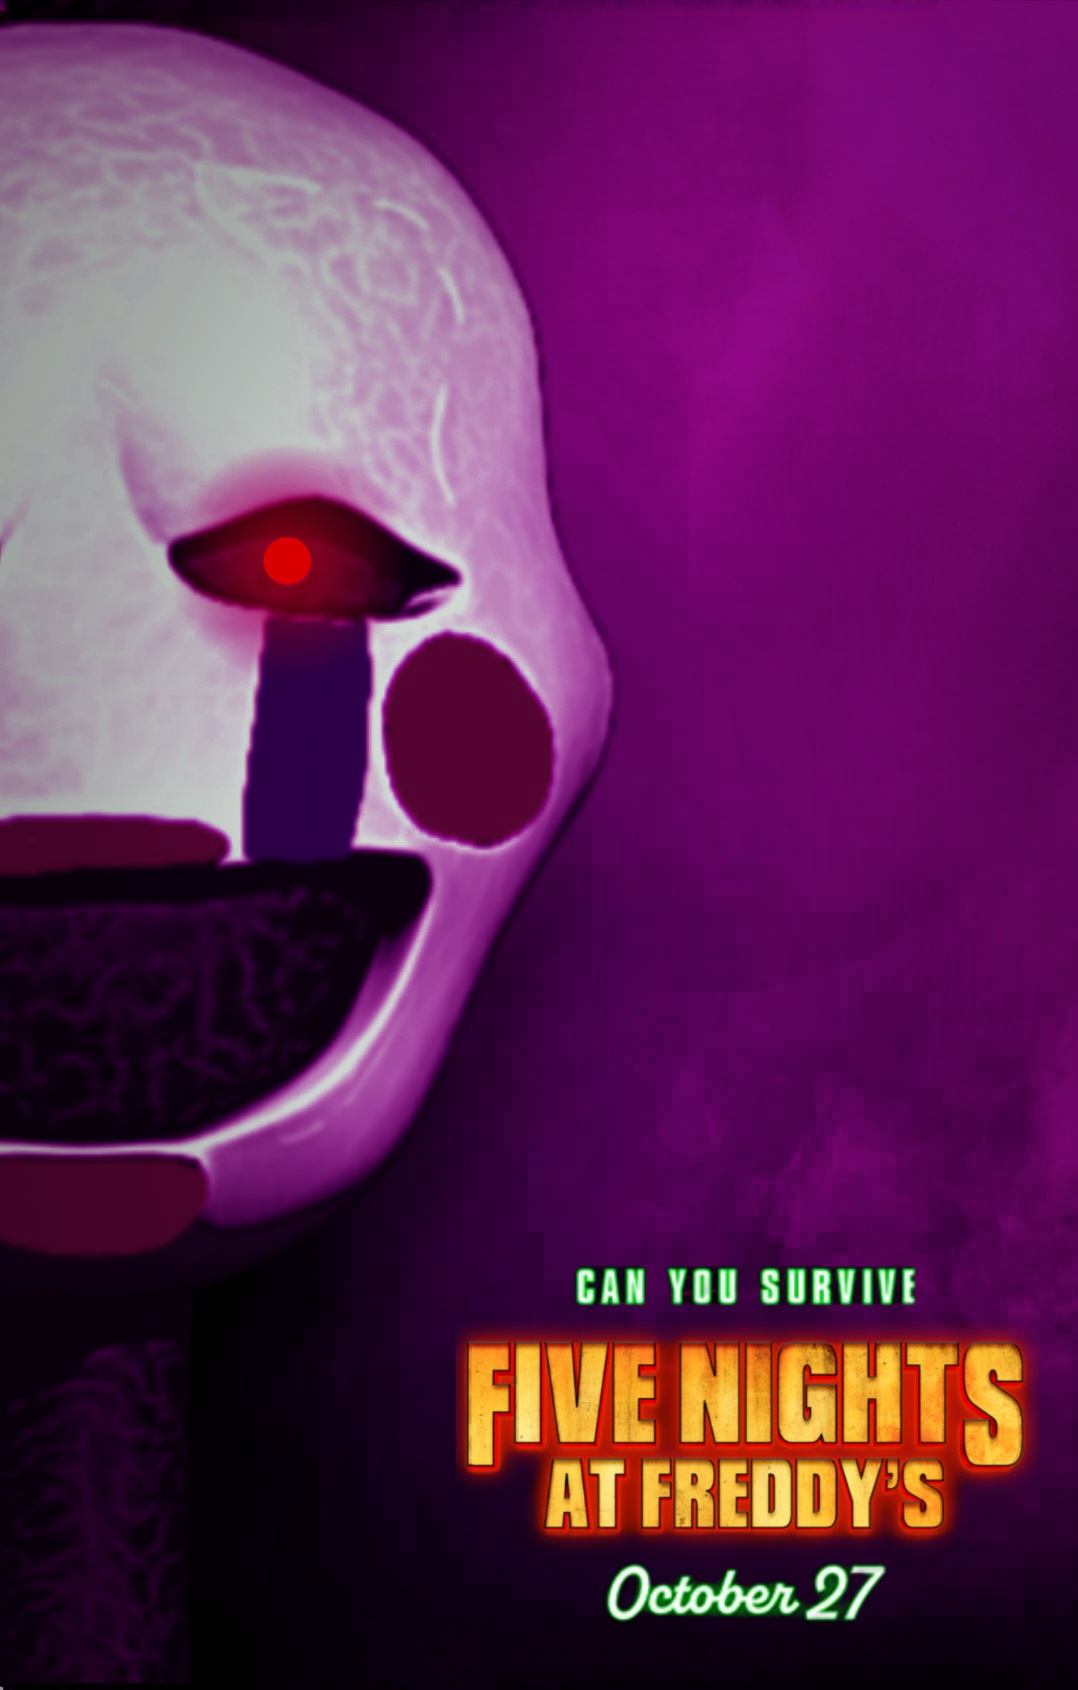 Fnaf movie puppet poster by gavin53zan on DeviantArt